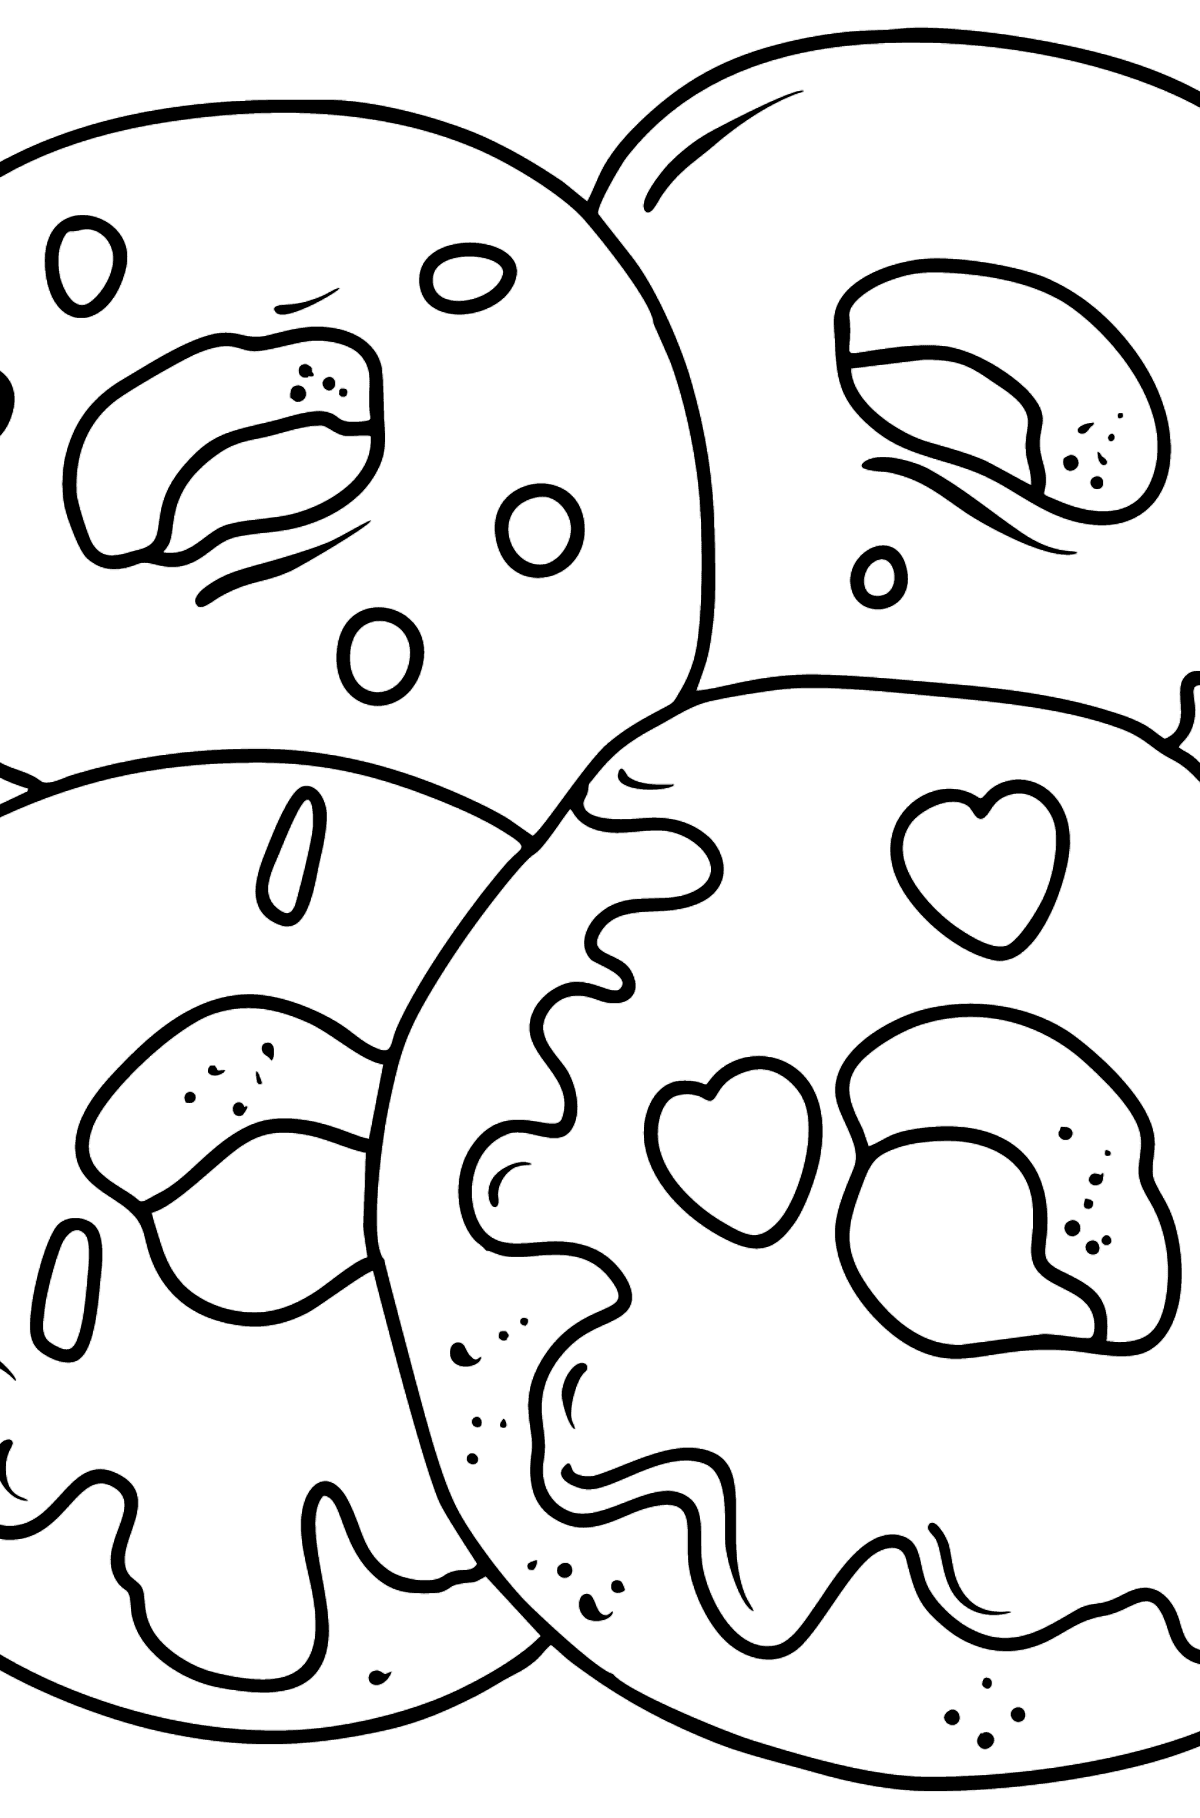 Розмальовка Пончики - Розмальовки для дітей